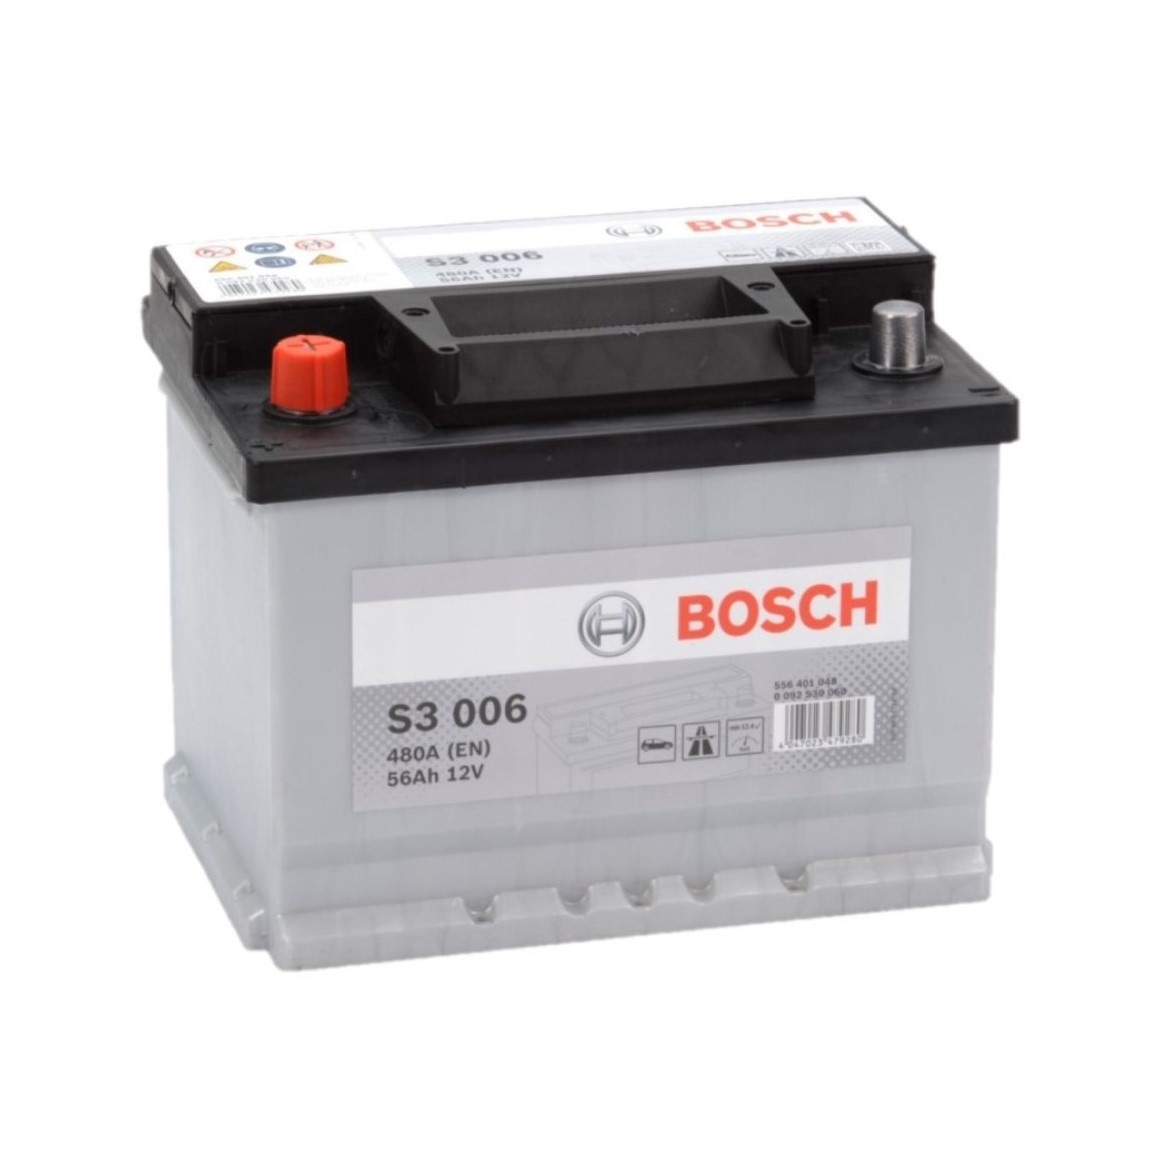 Bosch Auto 12 56 Type S3006 + links - Service Holland